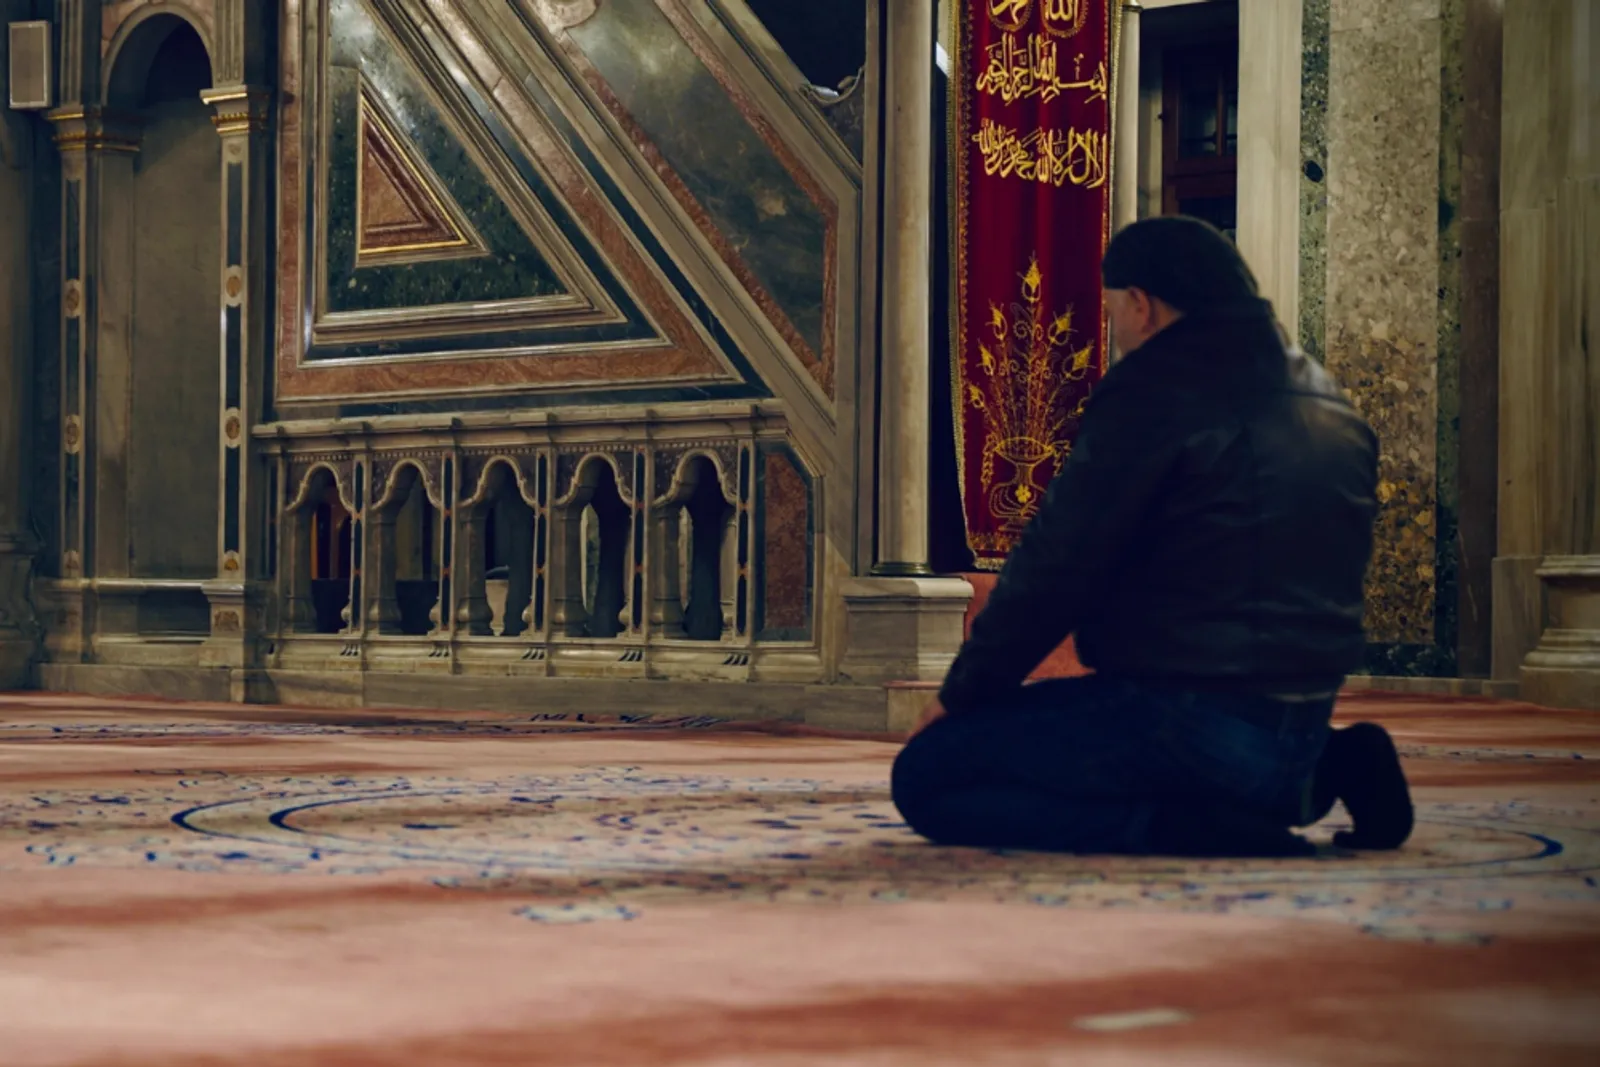 Bacaan Doa Tahiyat Akhir Sebelum Salam Lengkap Arab, Latin dan Artinya